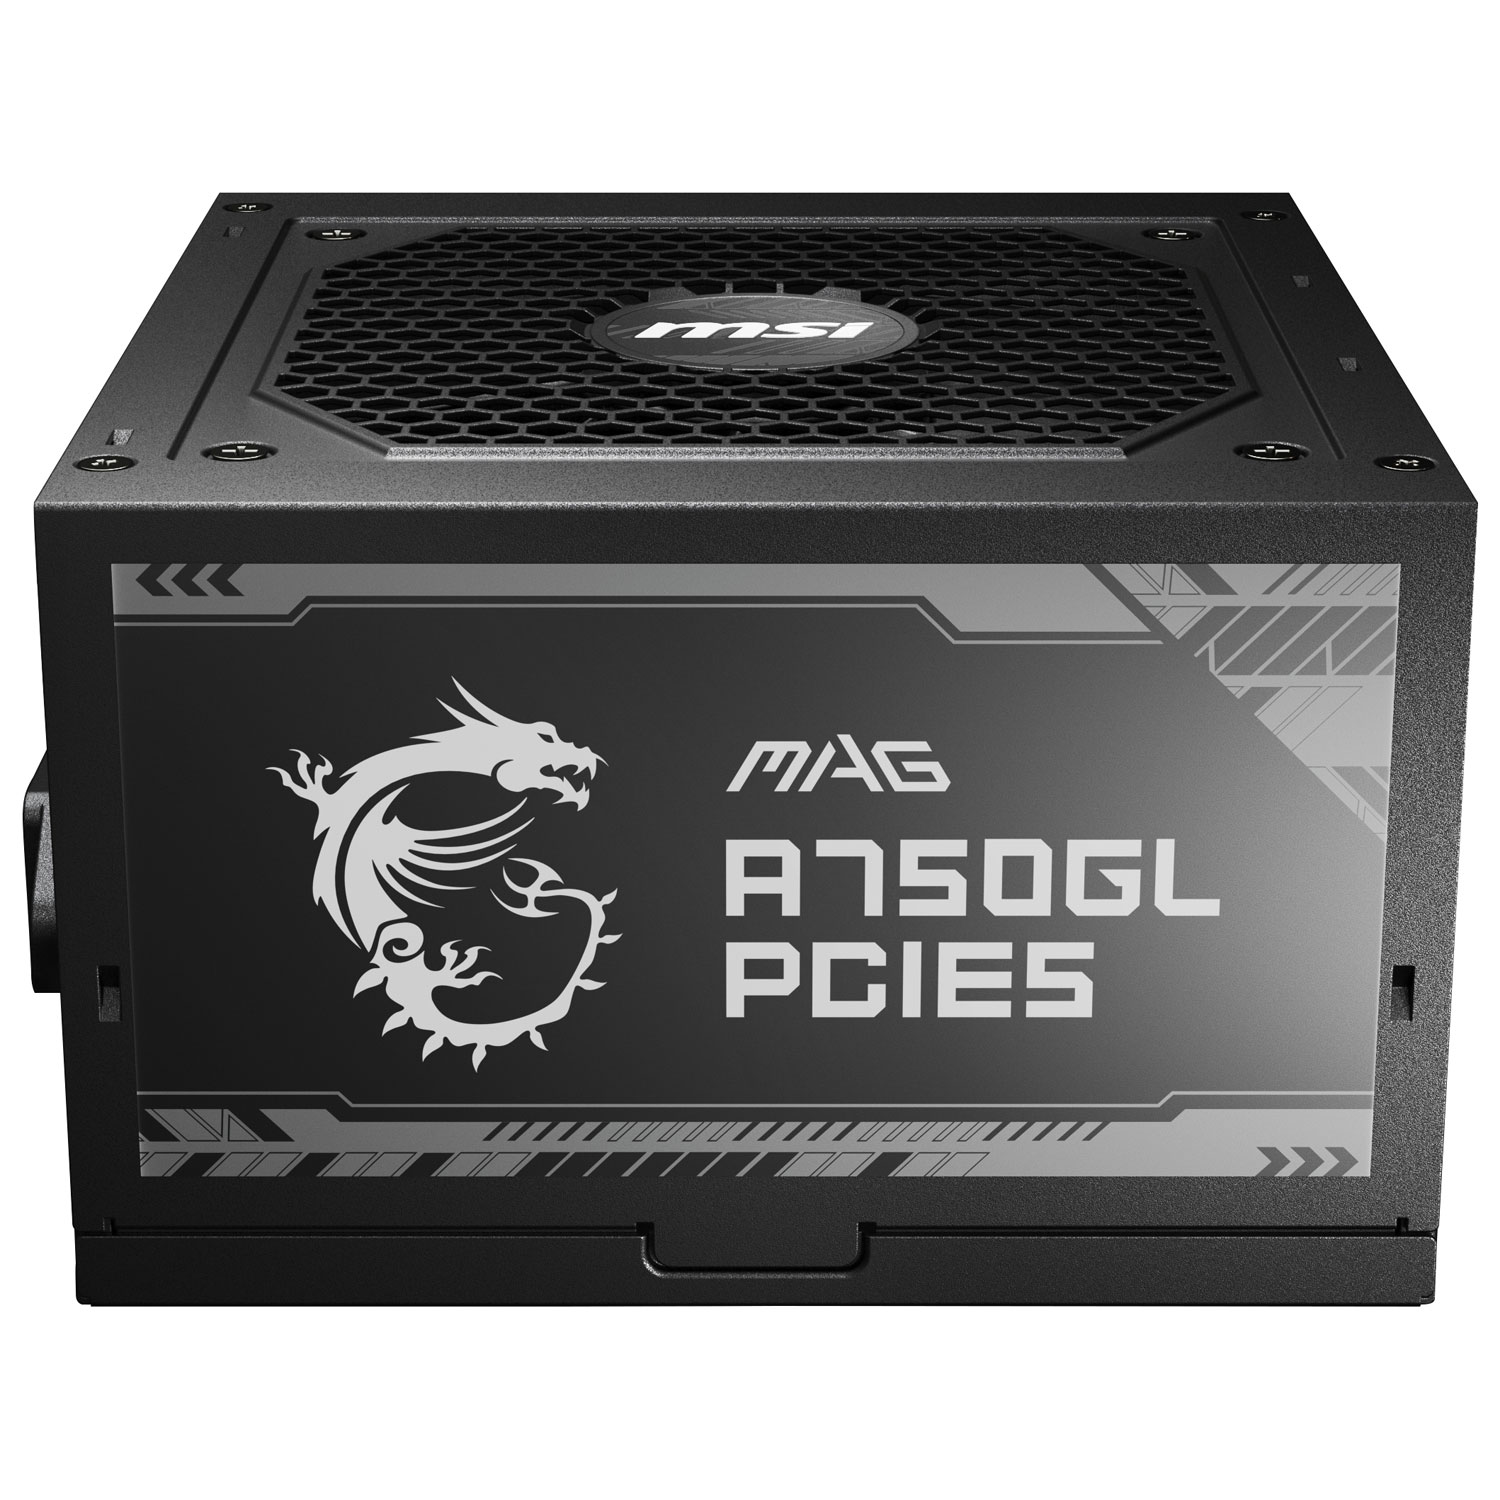 MSI MAG A750GL PCIE 5 80 Plus Gold 750W Fully Modular 12VHPWR